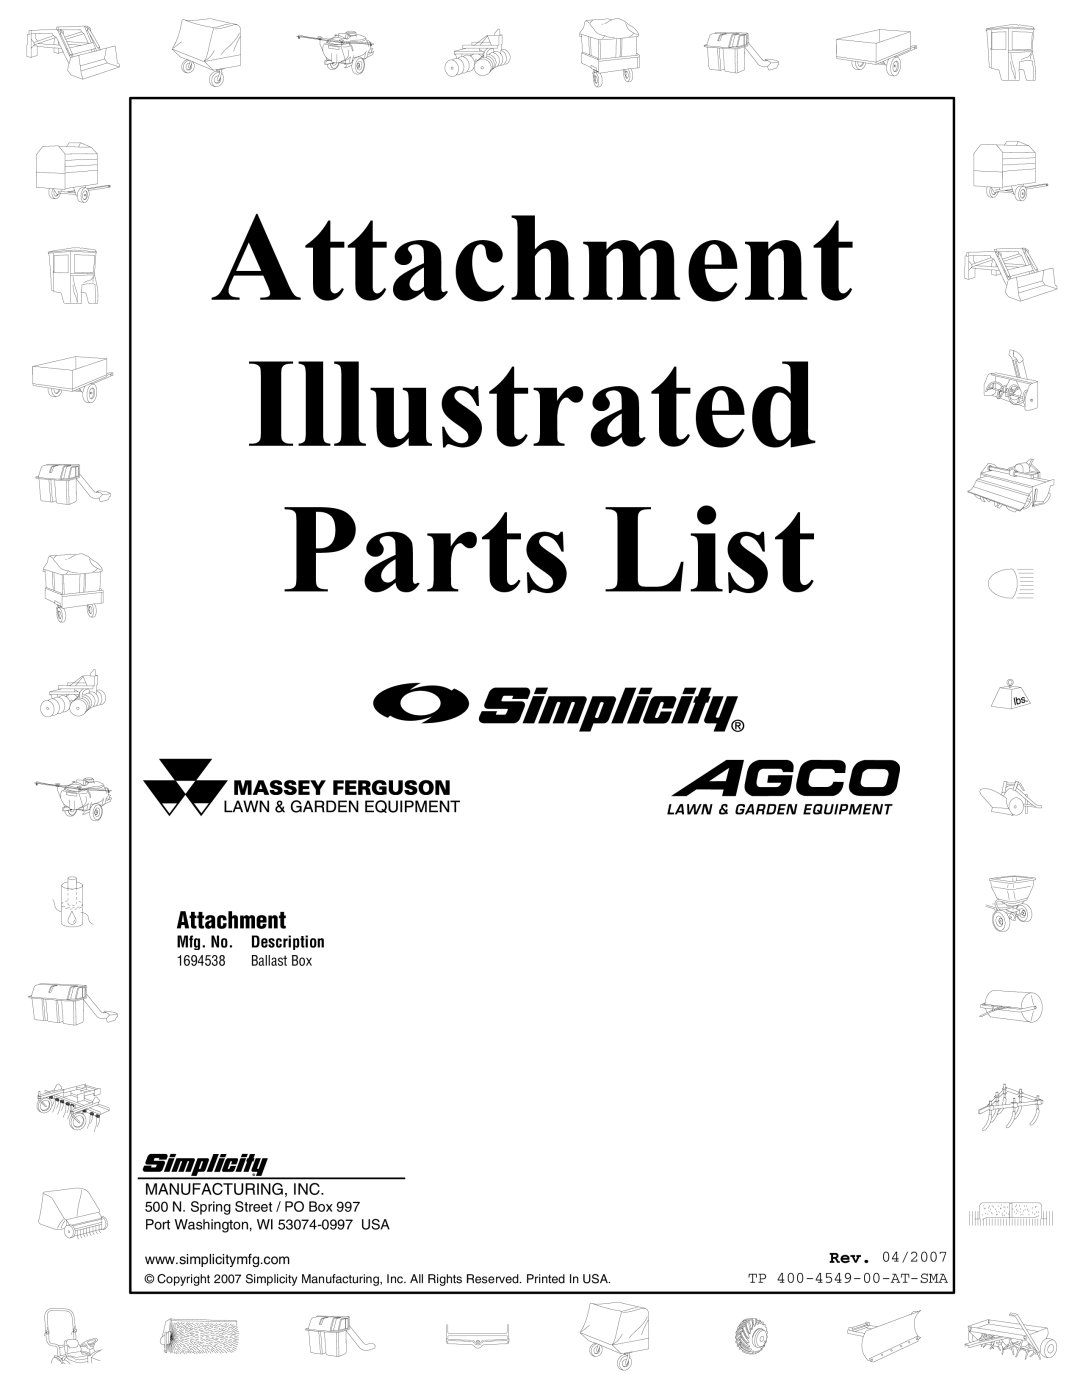 Snapper manual Attachment, Mfg. No, Description, Rev. 04/2007, TP 400-4549-00-AT-SMA, Illustrated, Parts List 